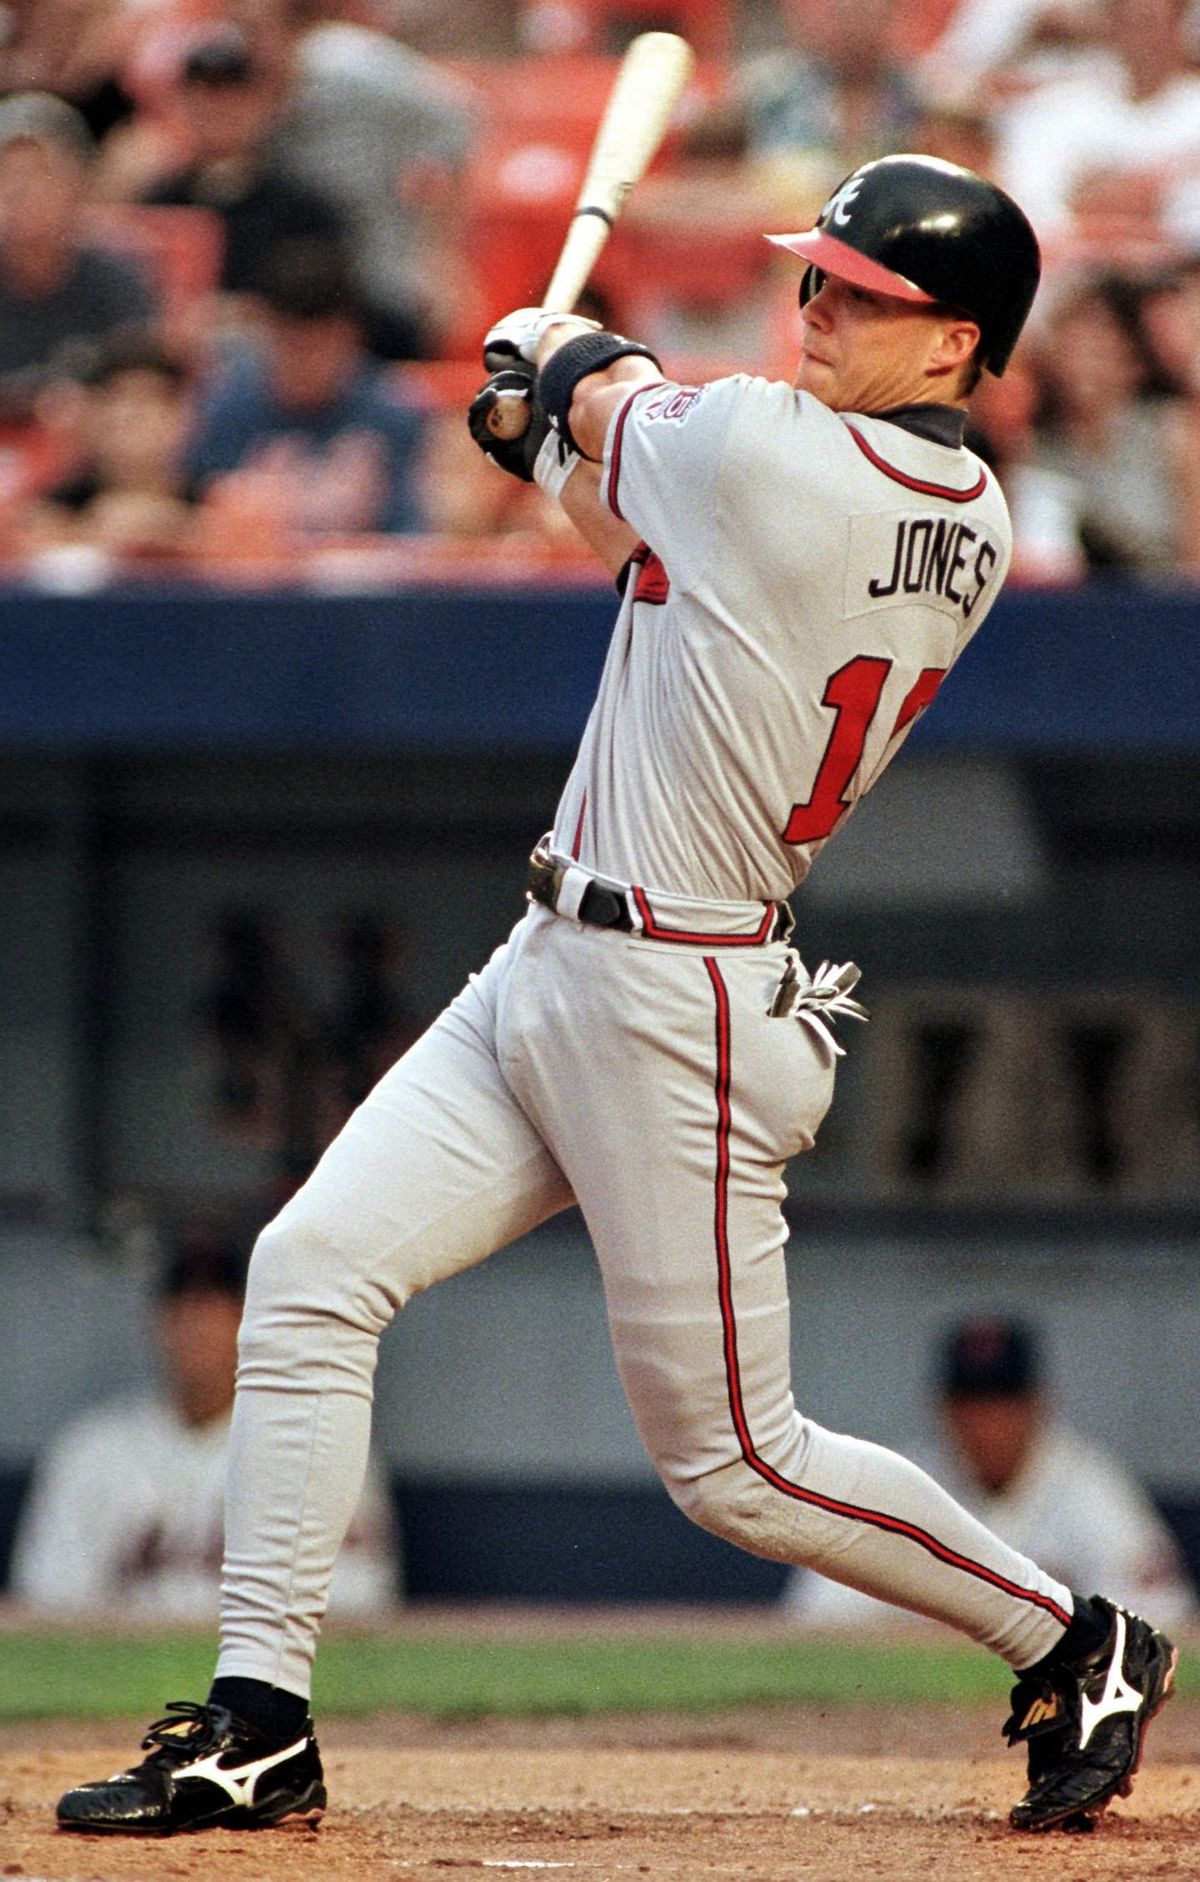 Atlanta Braves’ third baseman Chipper Jones drives